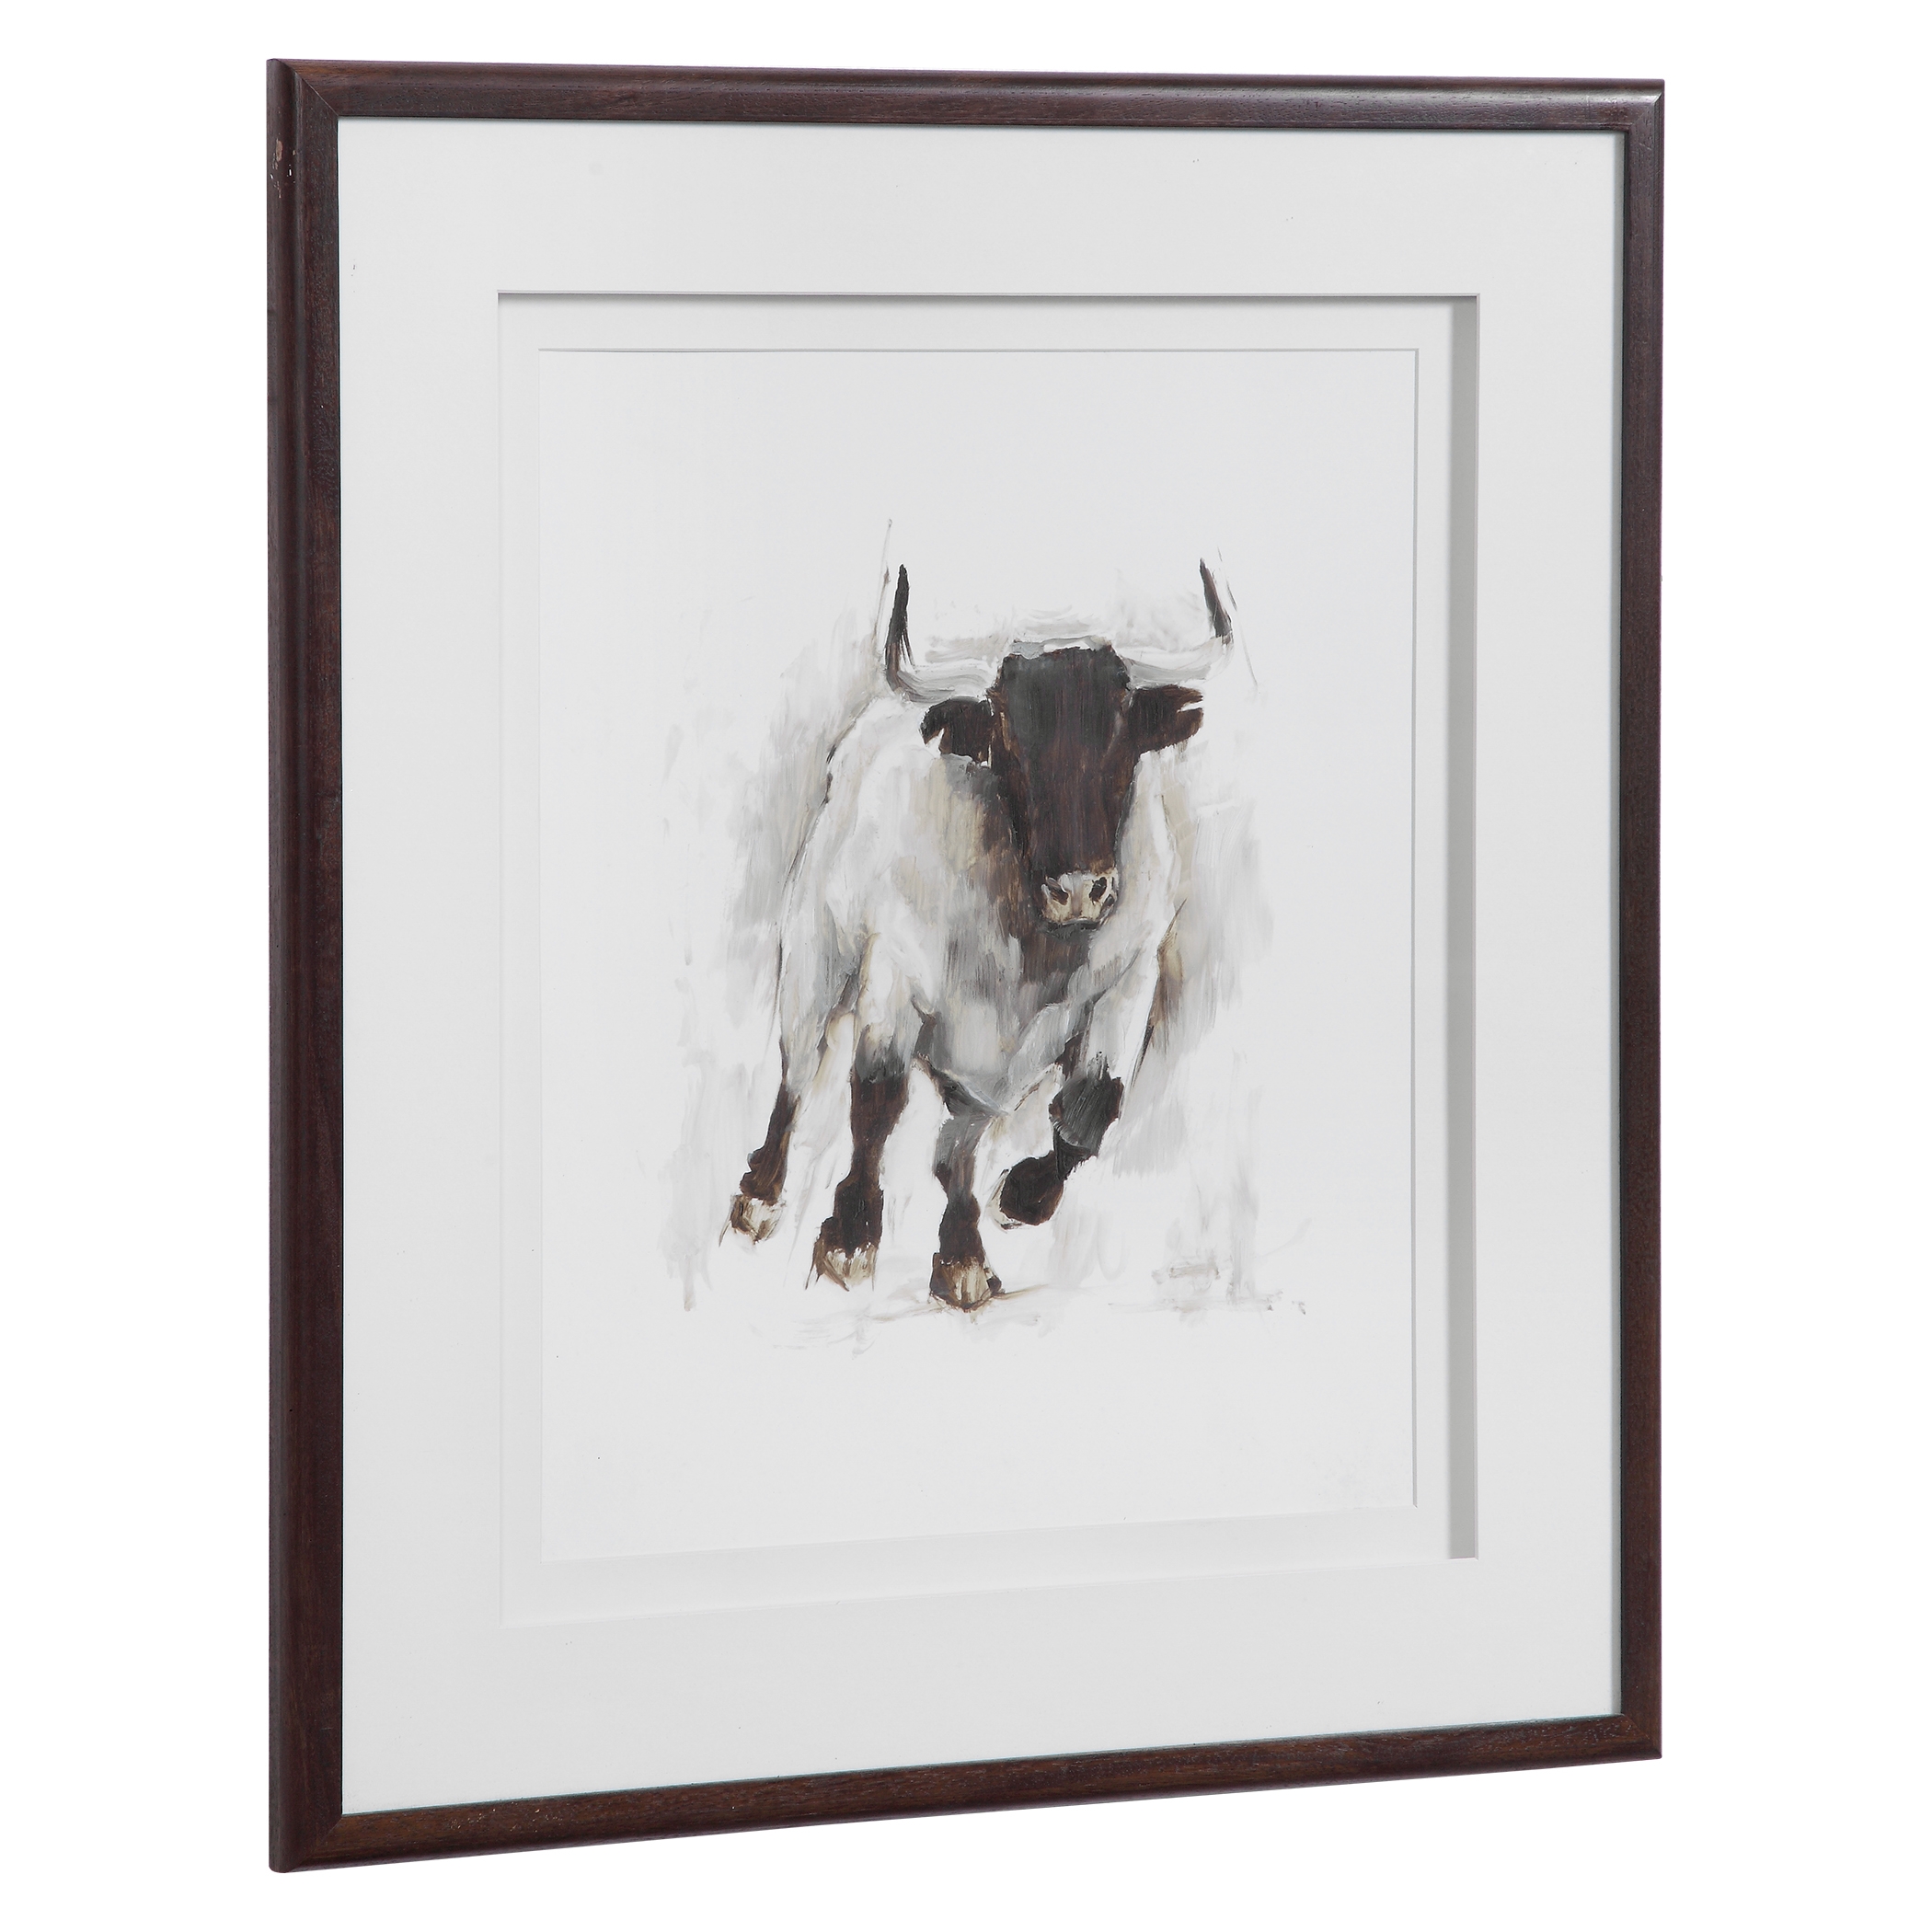 Rustic Bull Framed Animal Print - Image 4